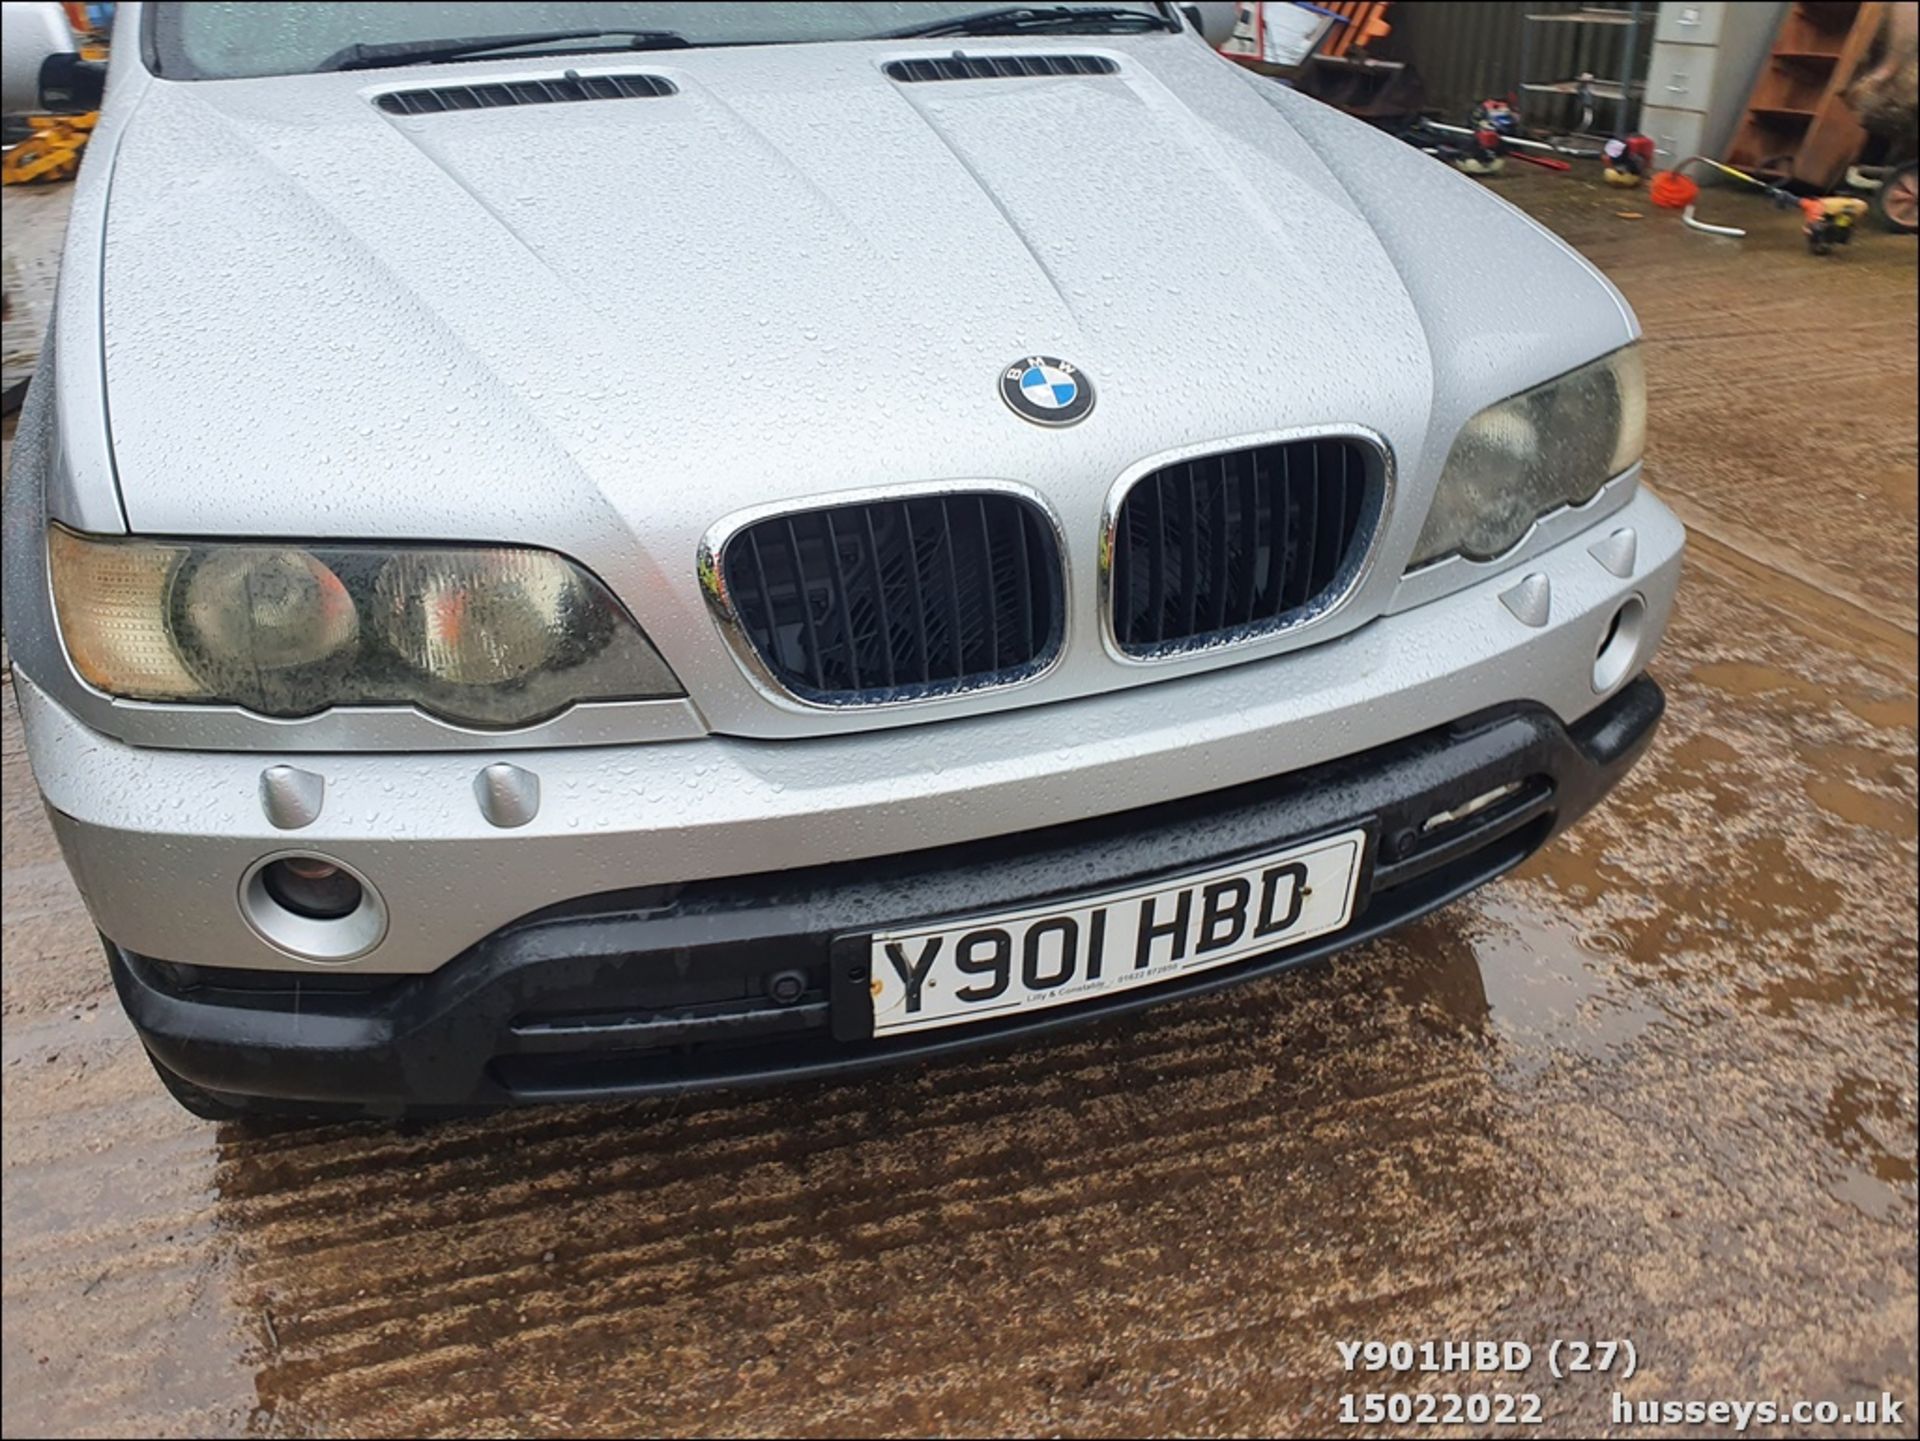 2001 BMW X5 SPORT AUTO - 2979cc 5dr Estate (Silver, 118k) - Image 27 of 41